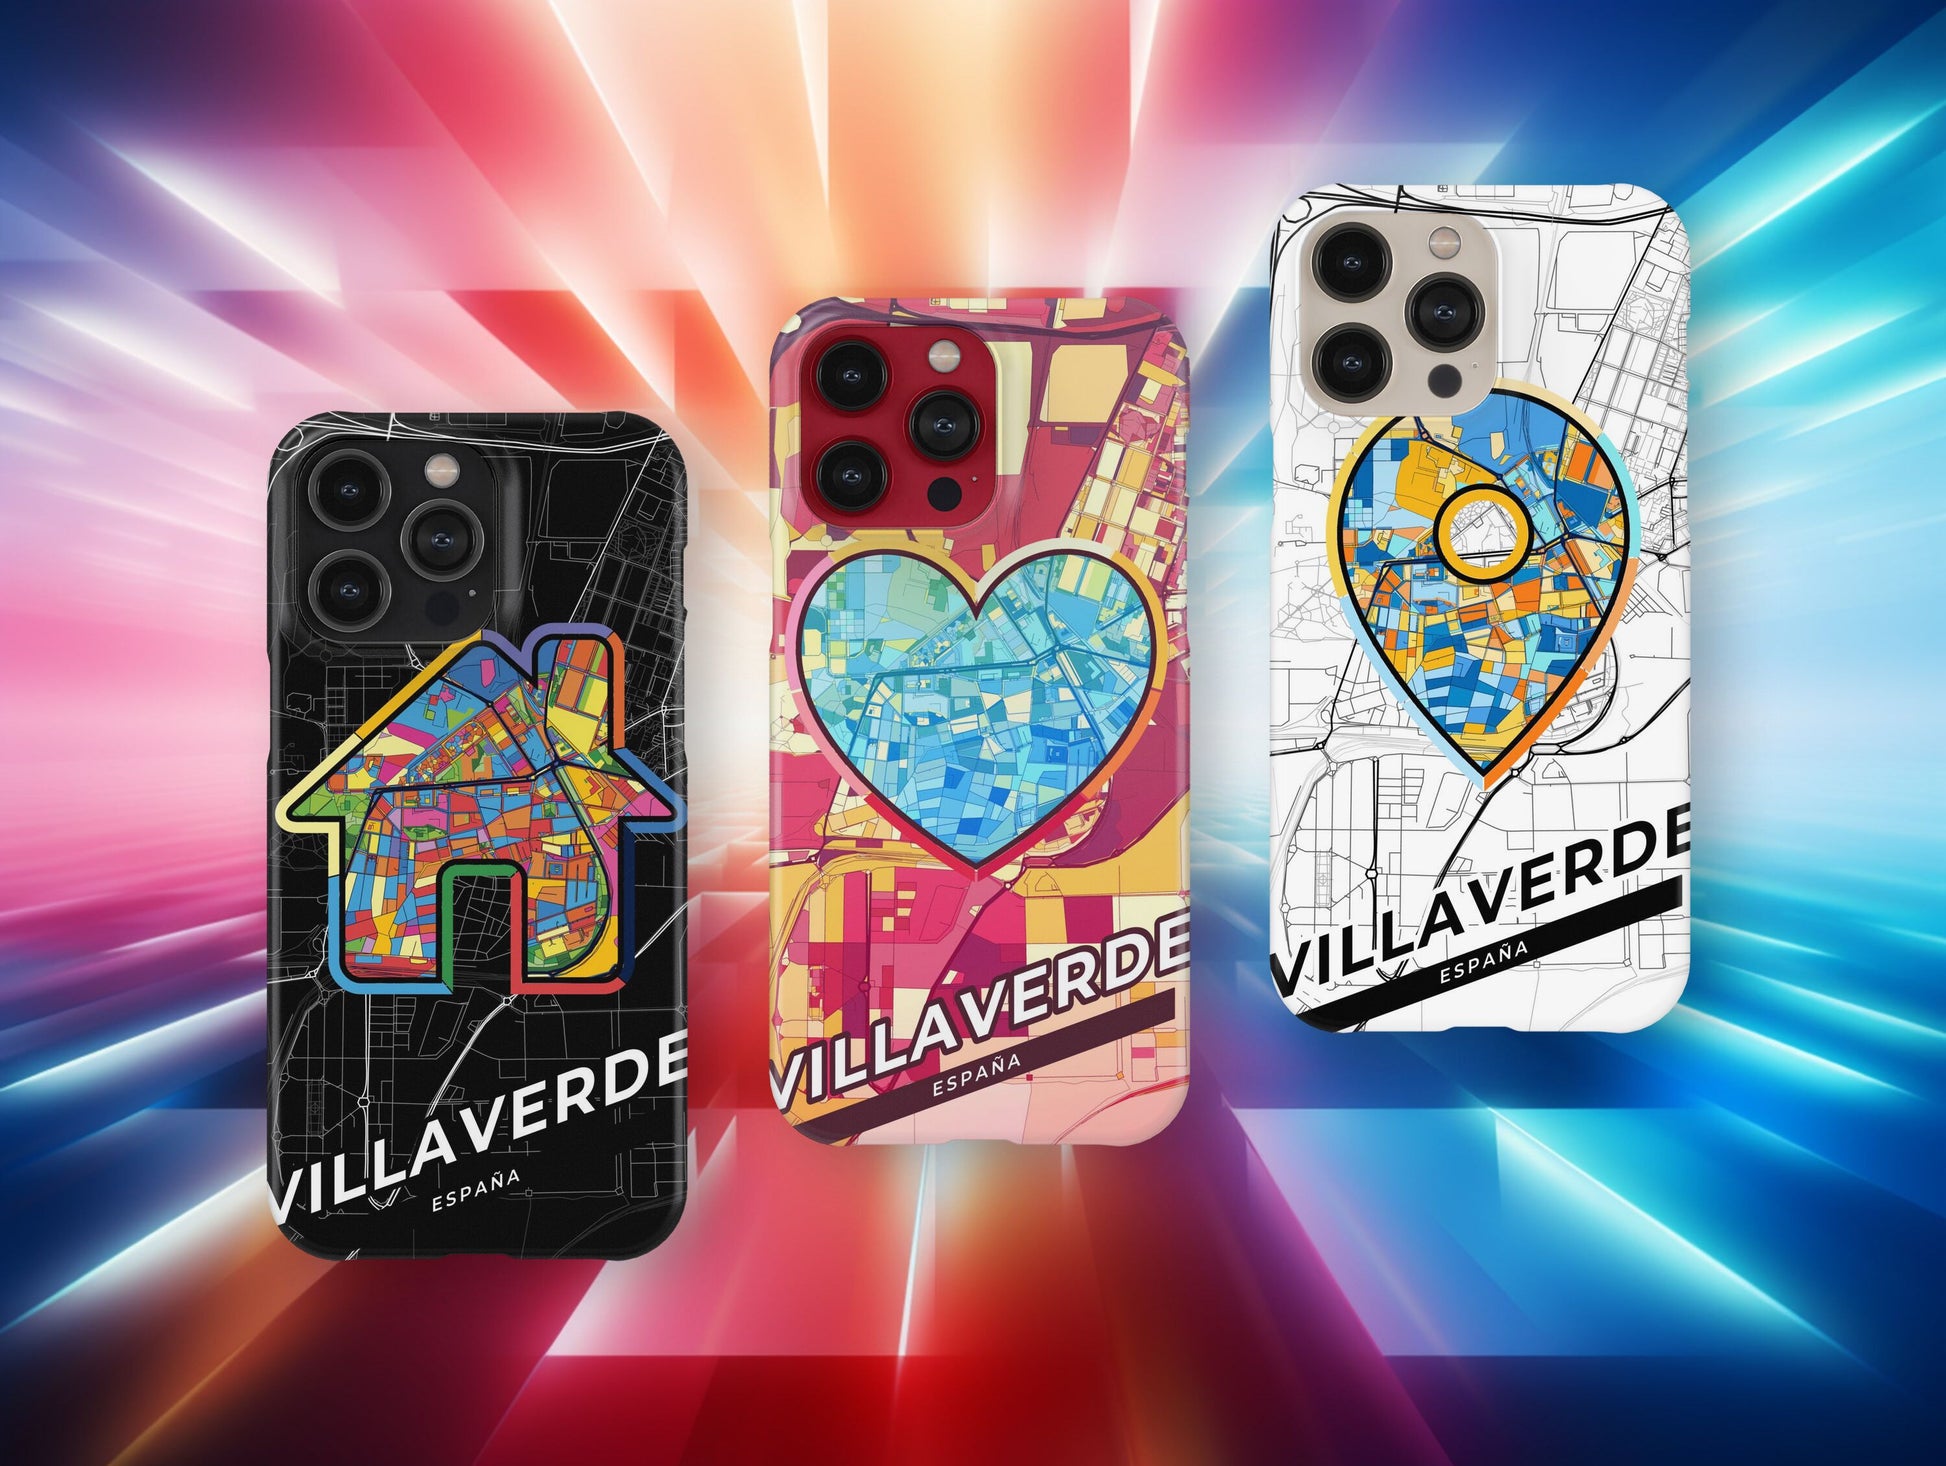 Villaverde Spain slim phone case with colorful icon